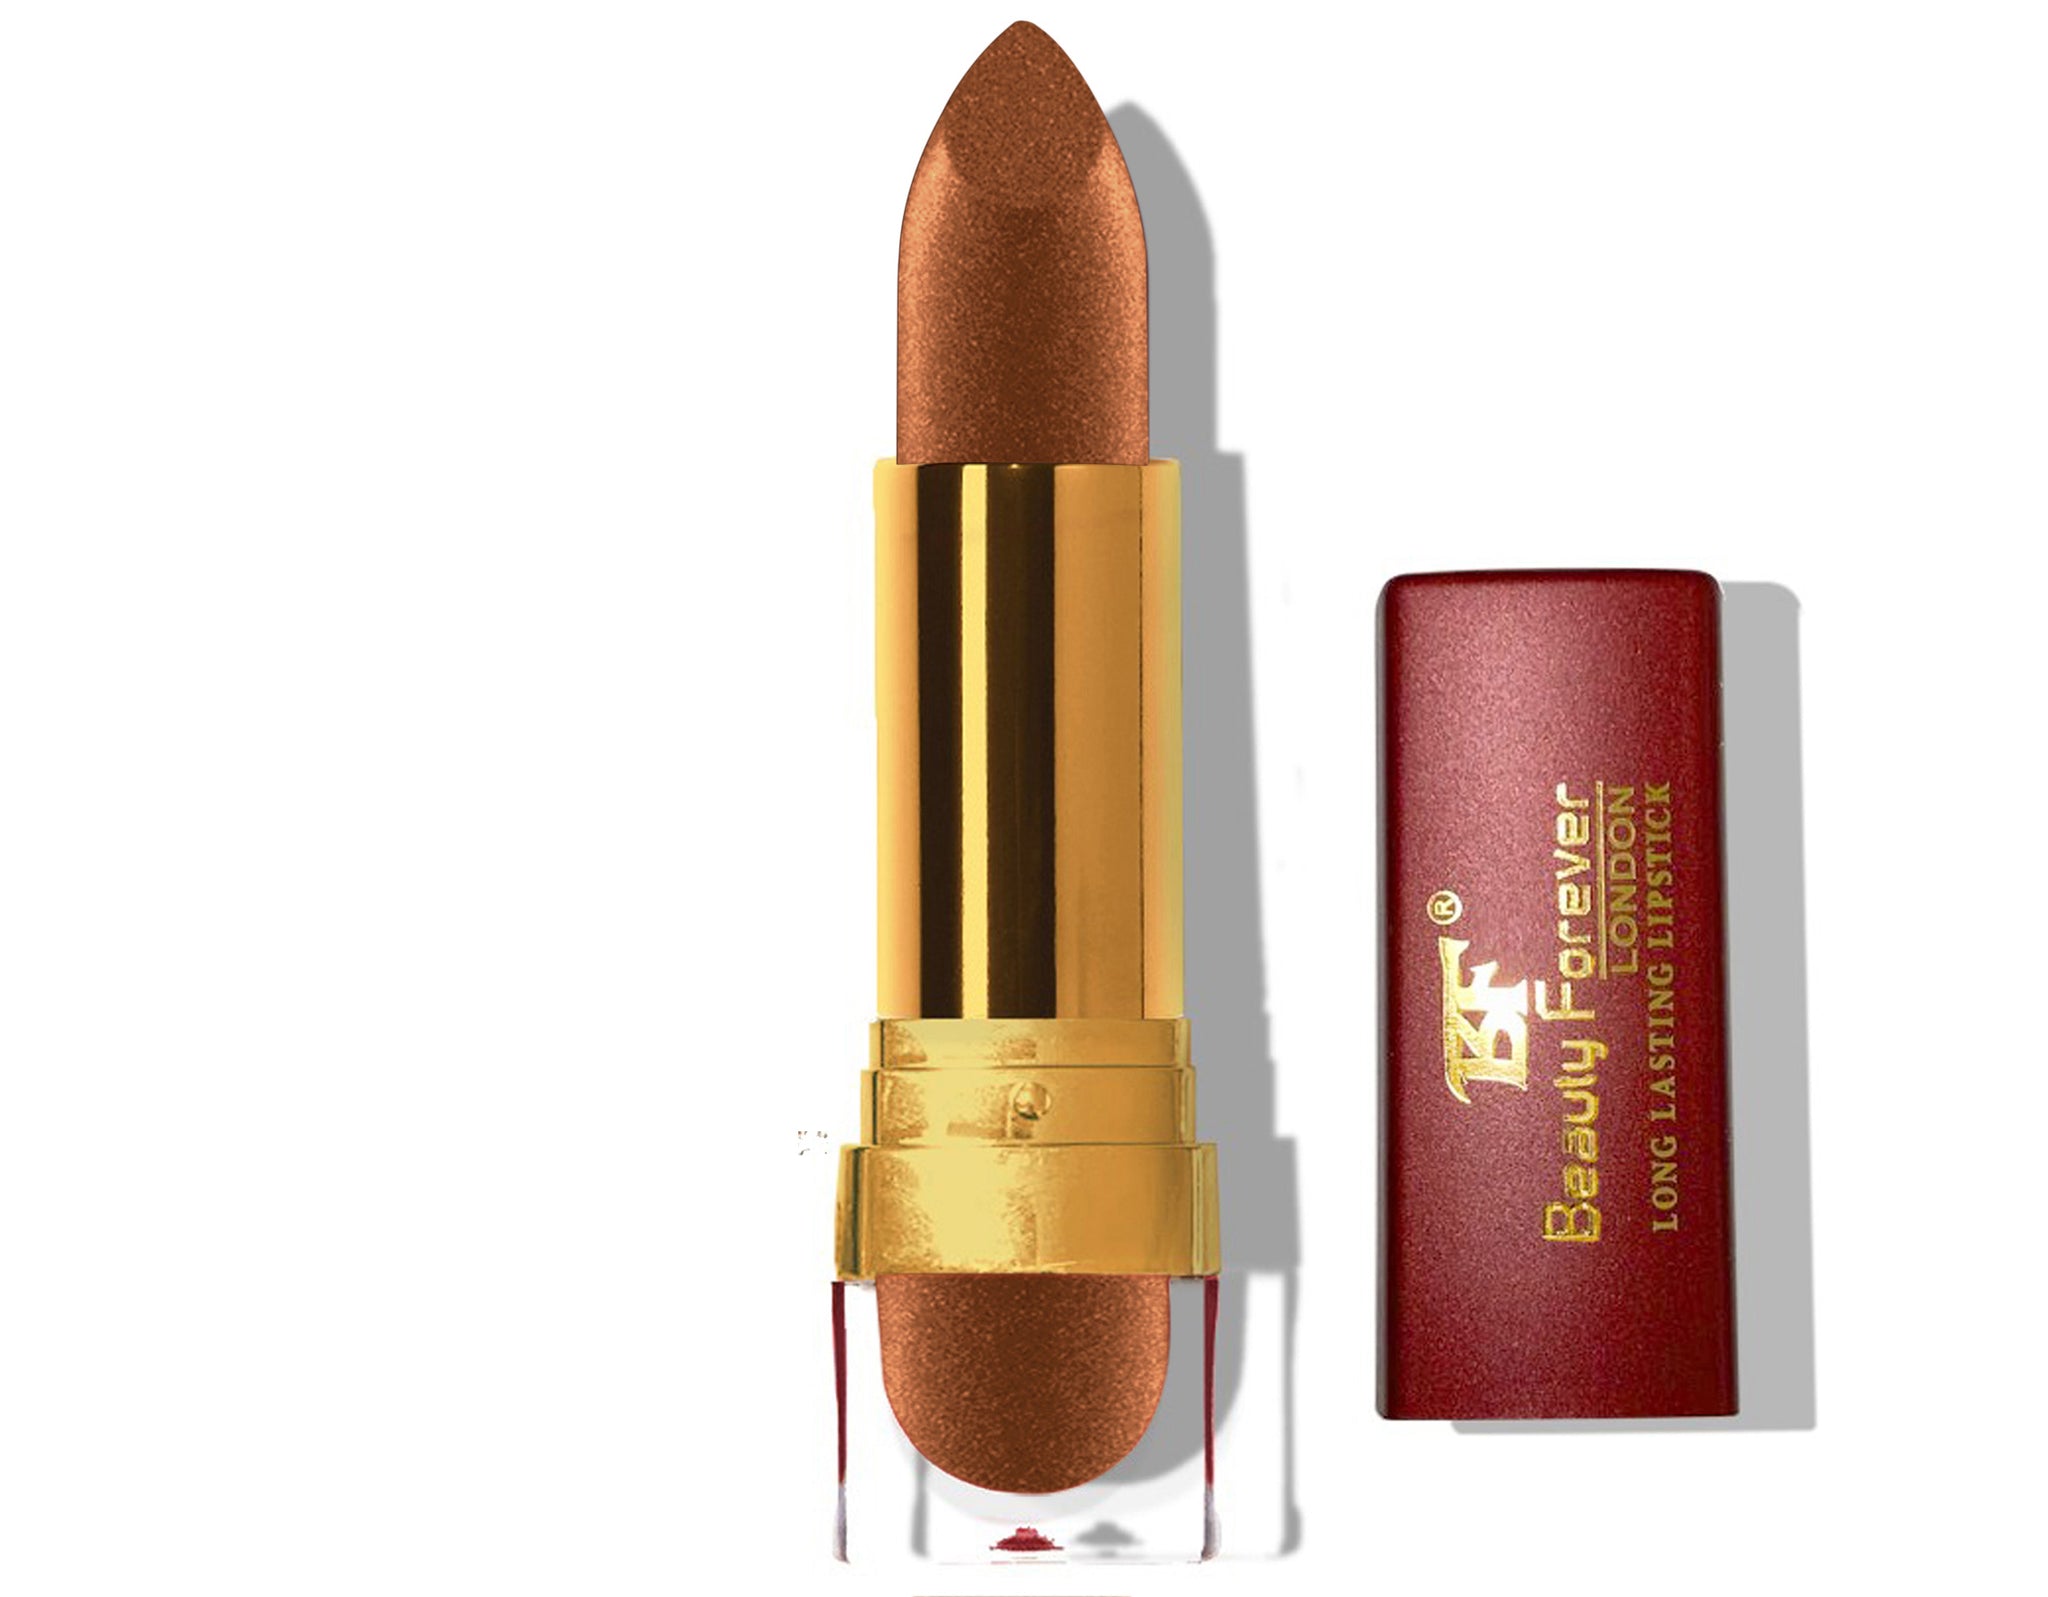 Beauty Forever Long Lasting Lipstick in 109 Golden Brown